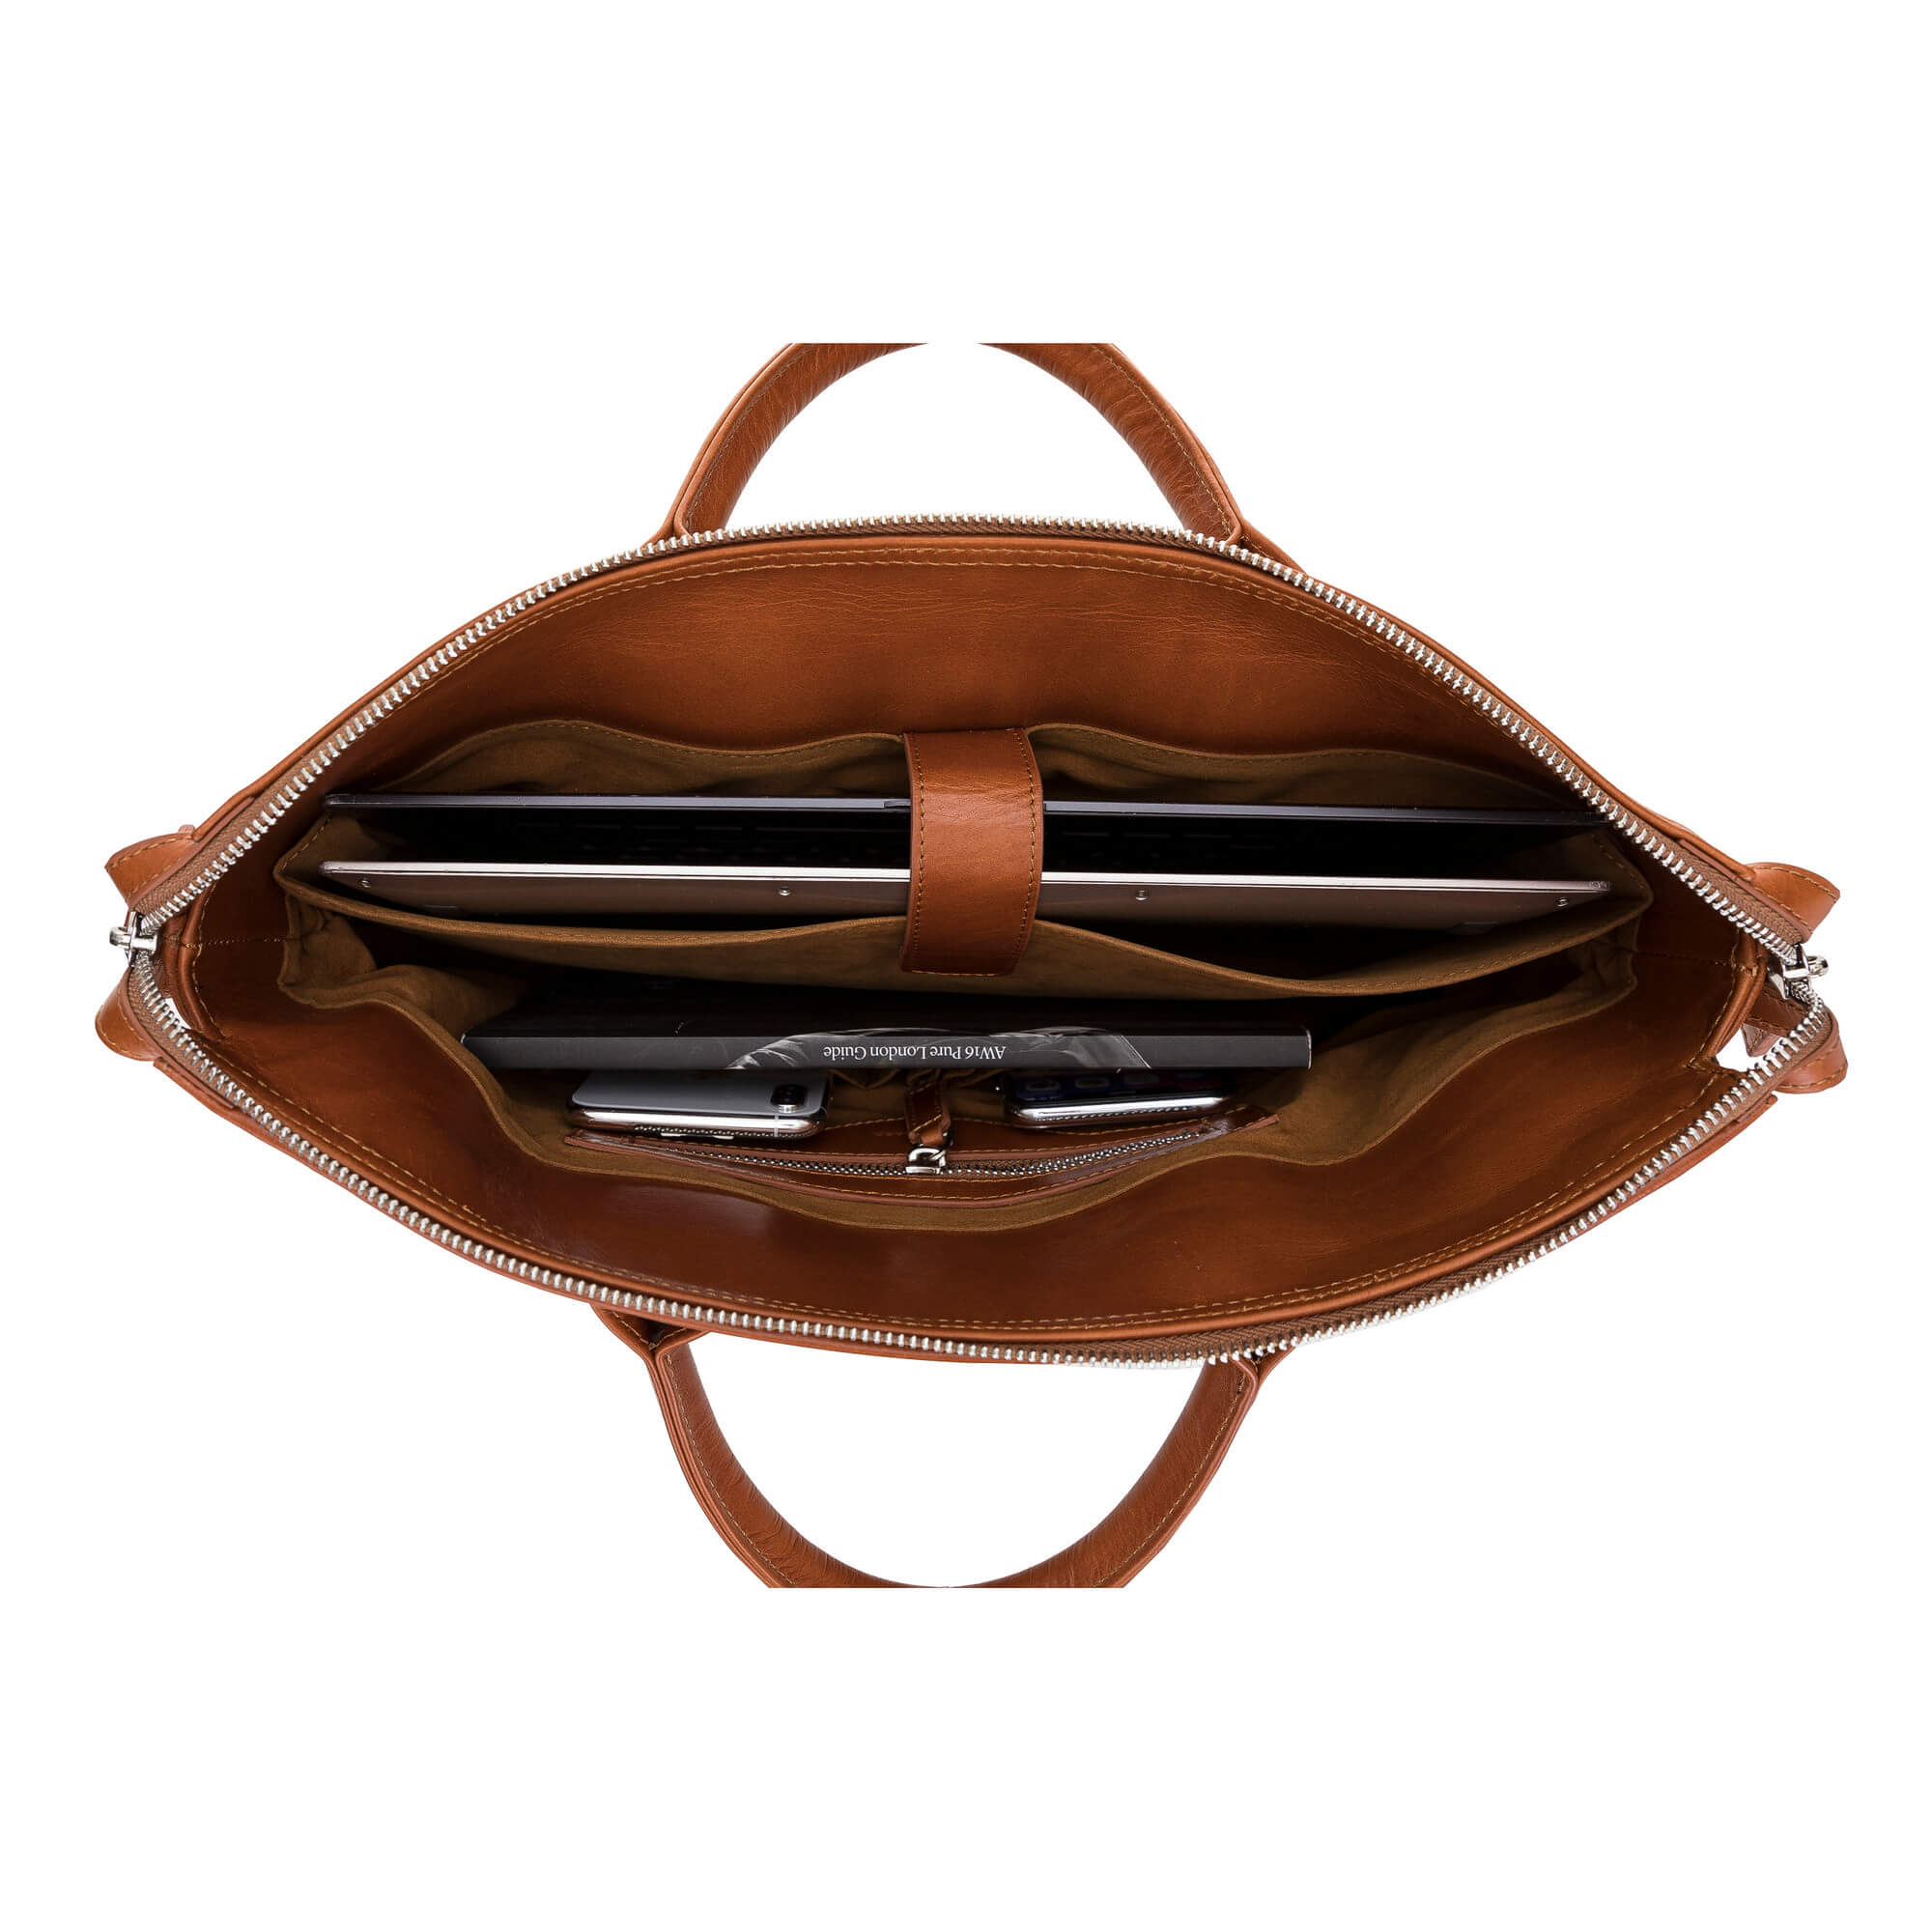 Wizard Briefcase Leather Bag - Laptop Bag